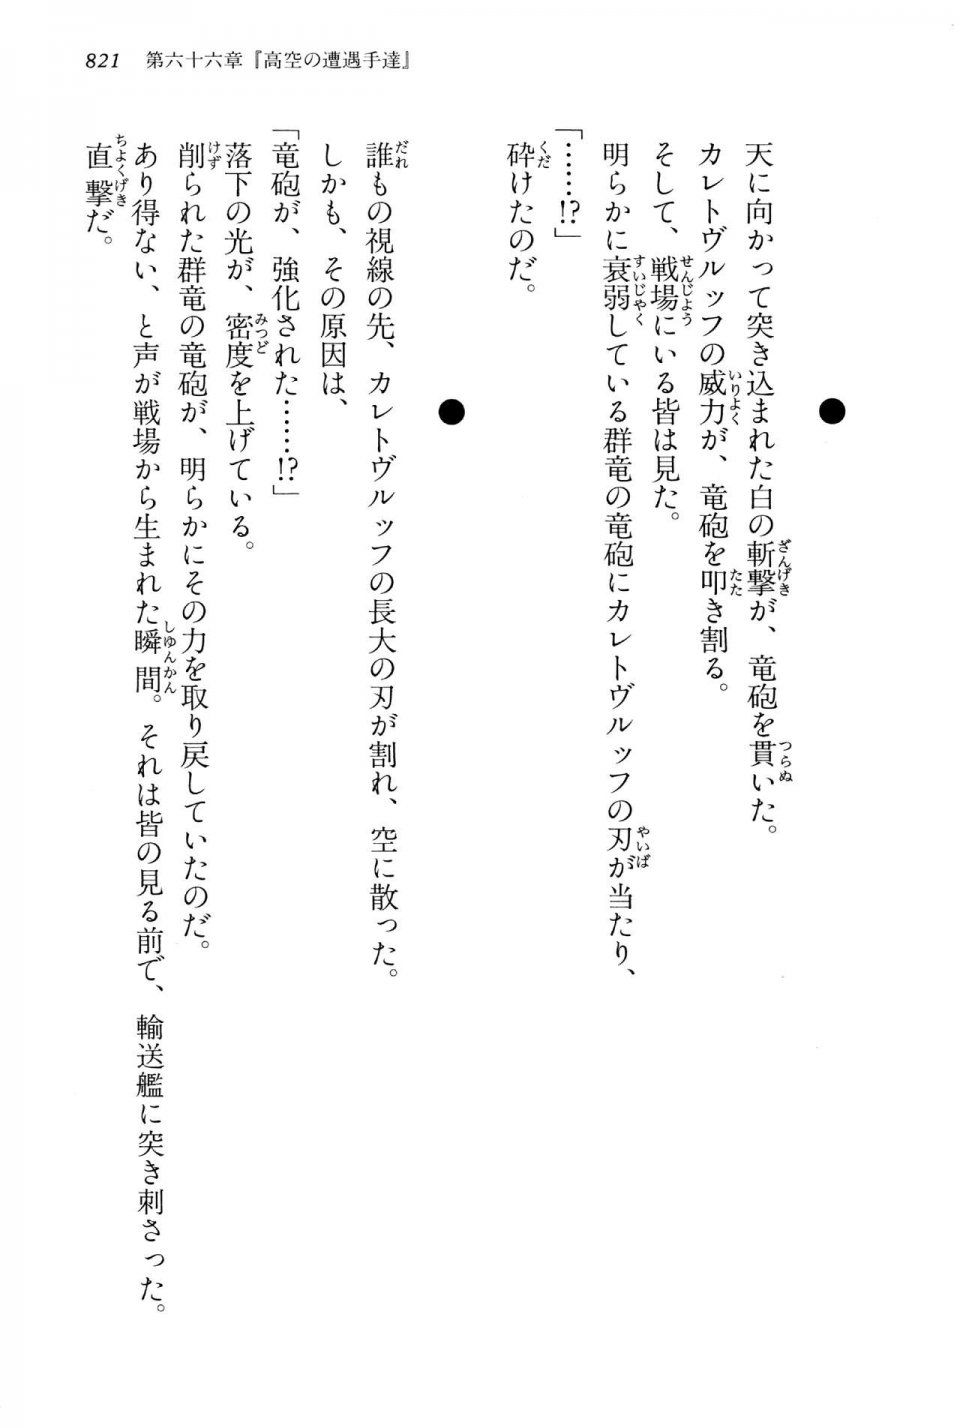 Kyoukai Senjou no Horizon LN Vol 15(6C) Part 2 - Photo #291